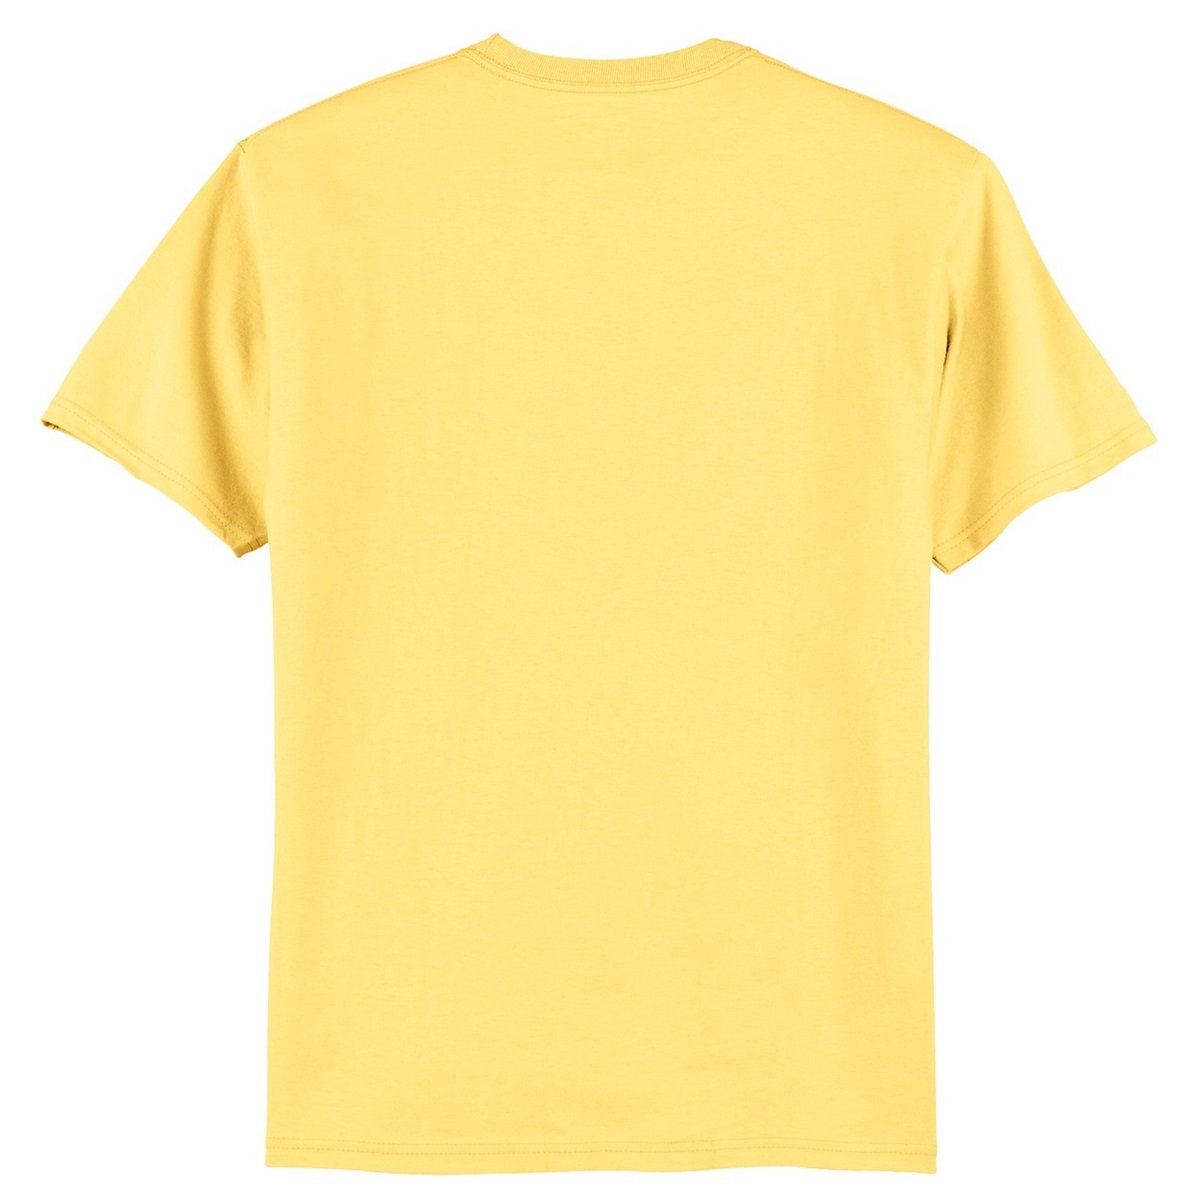 Hanes 5250 Tagless Cotton T-Shirt - Daffodil Yellow | FullSource.com